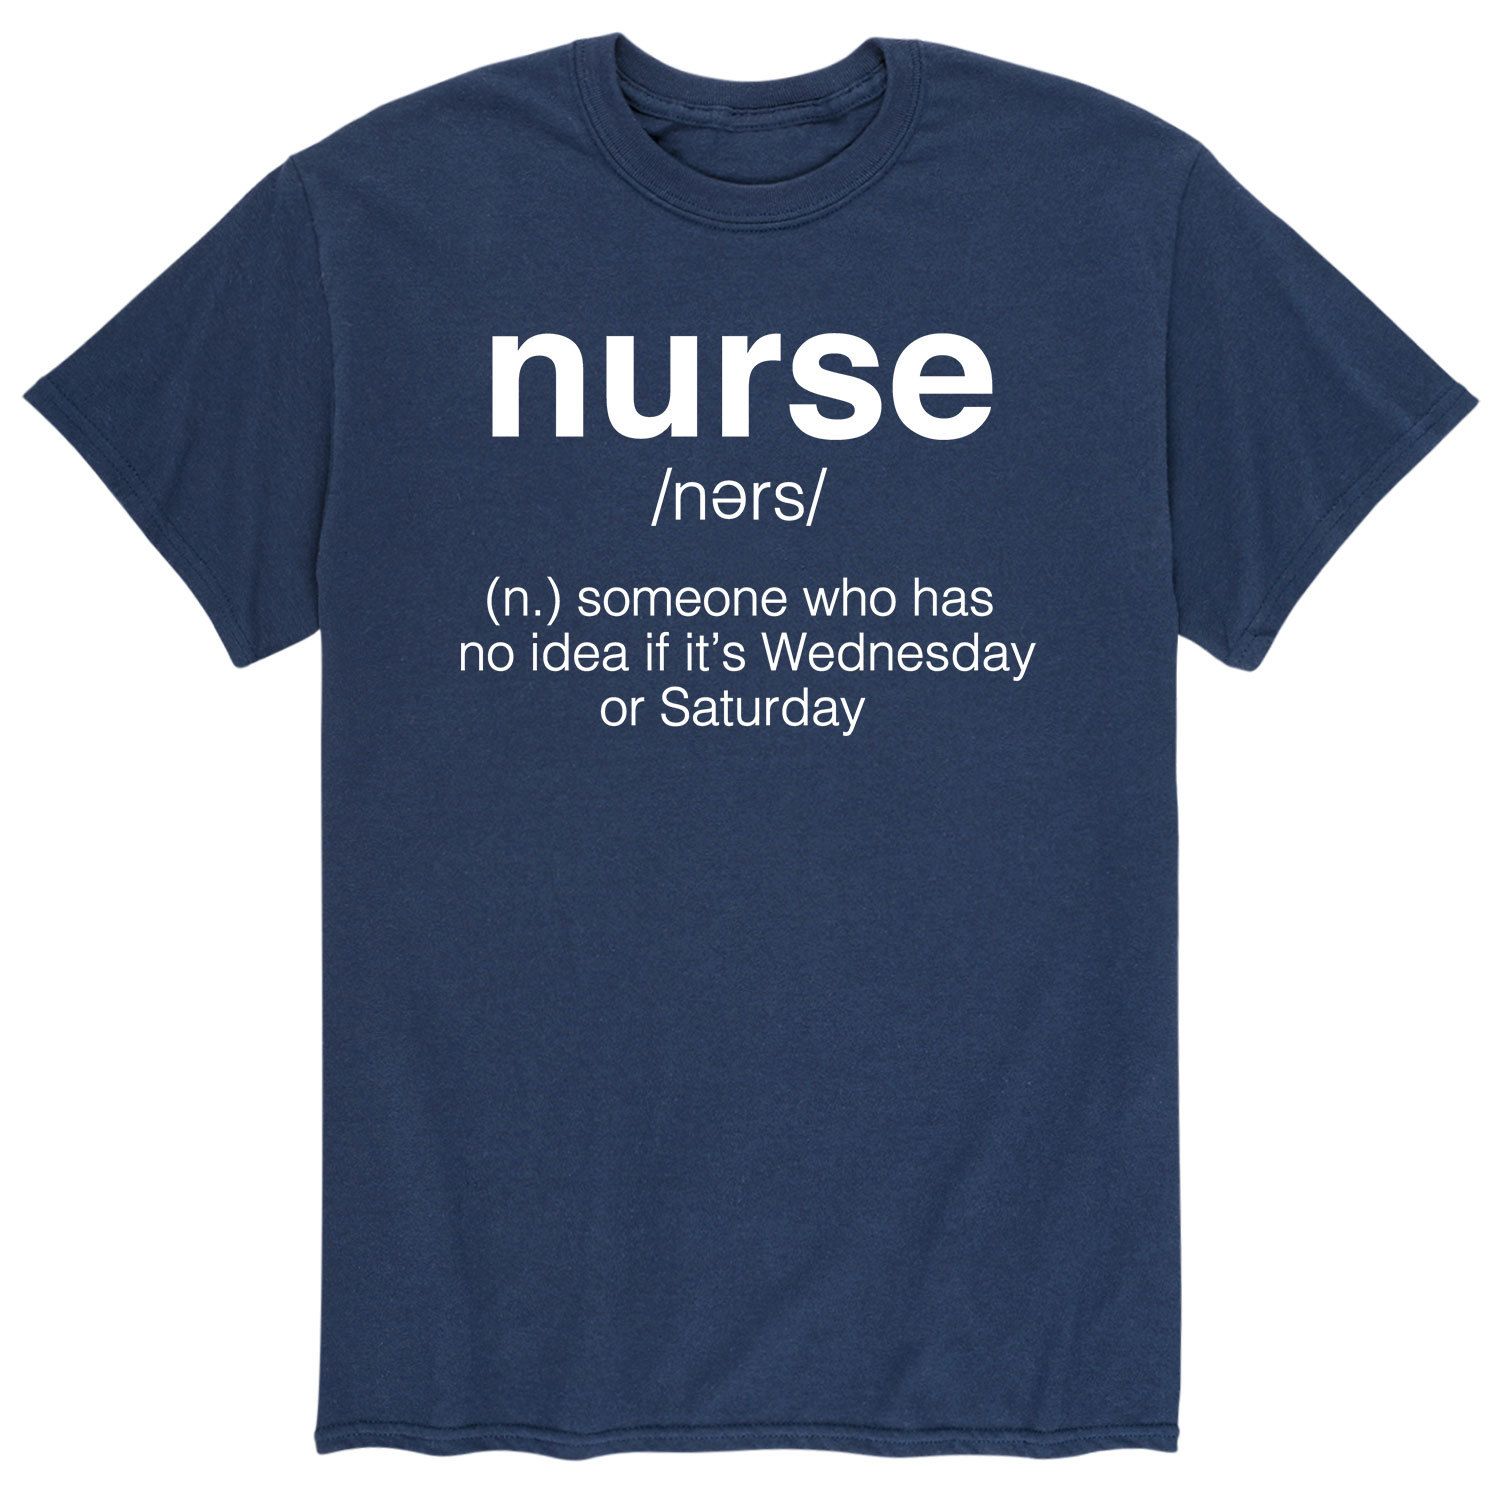 Мужская футболка с изображением медсестры Licensed Character